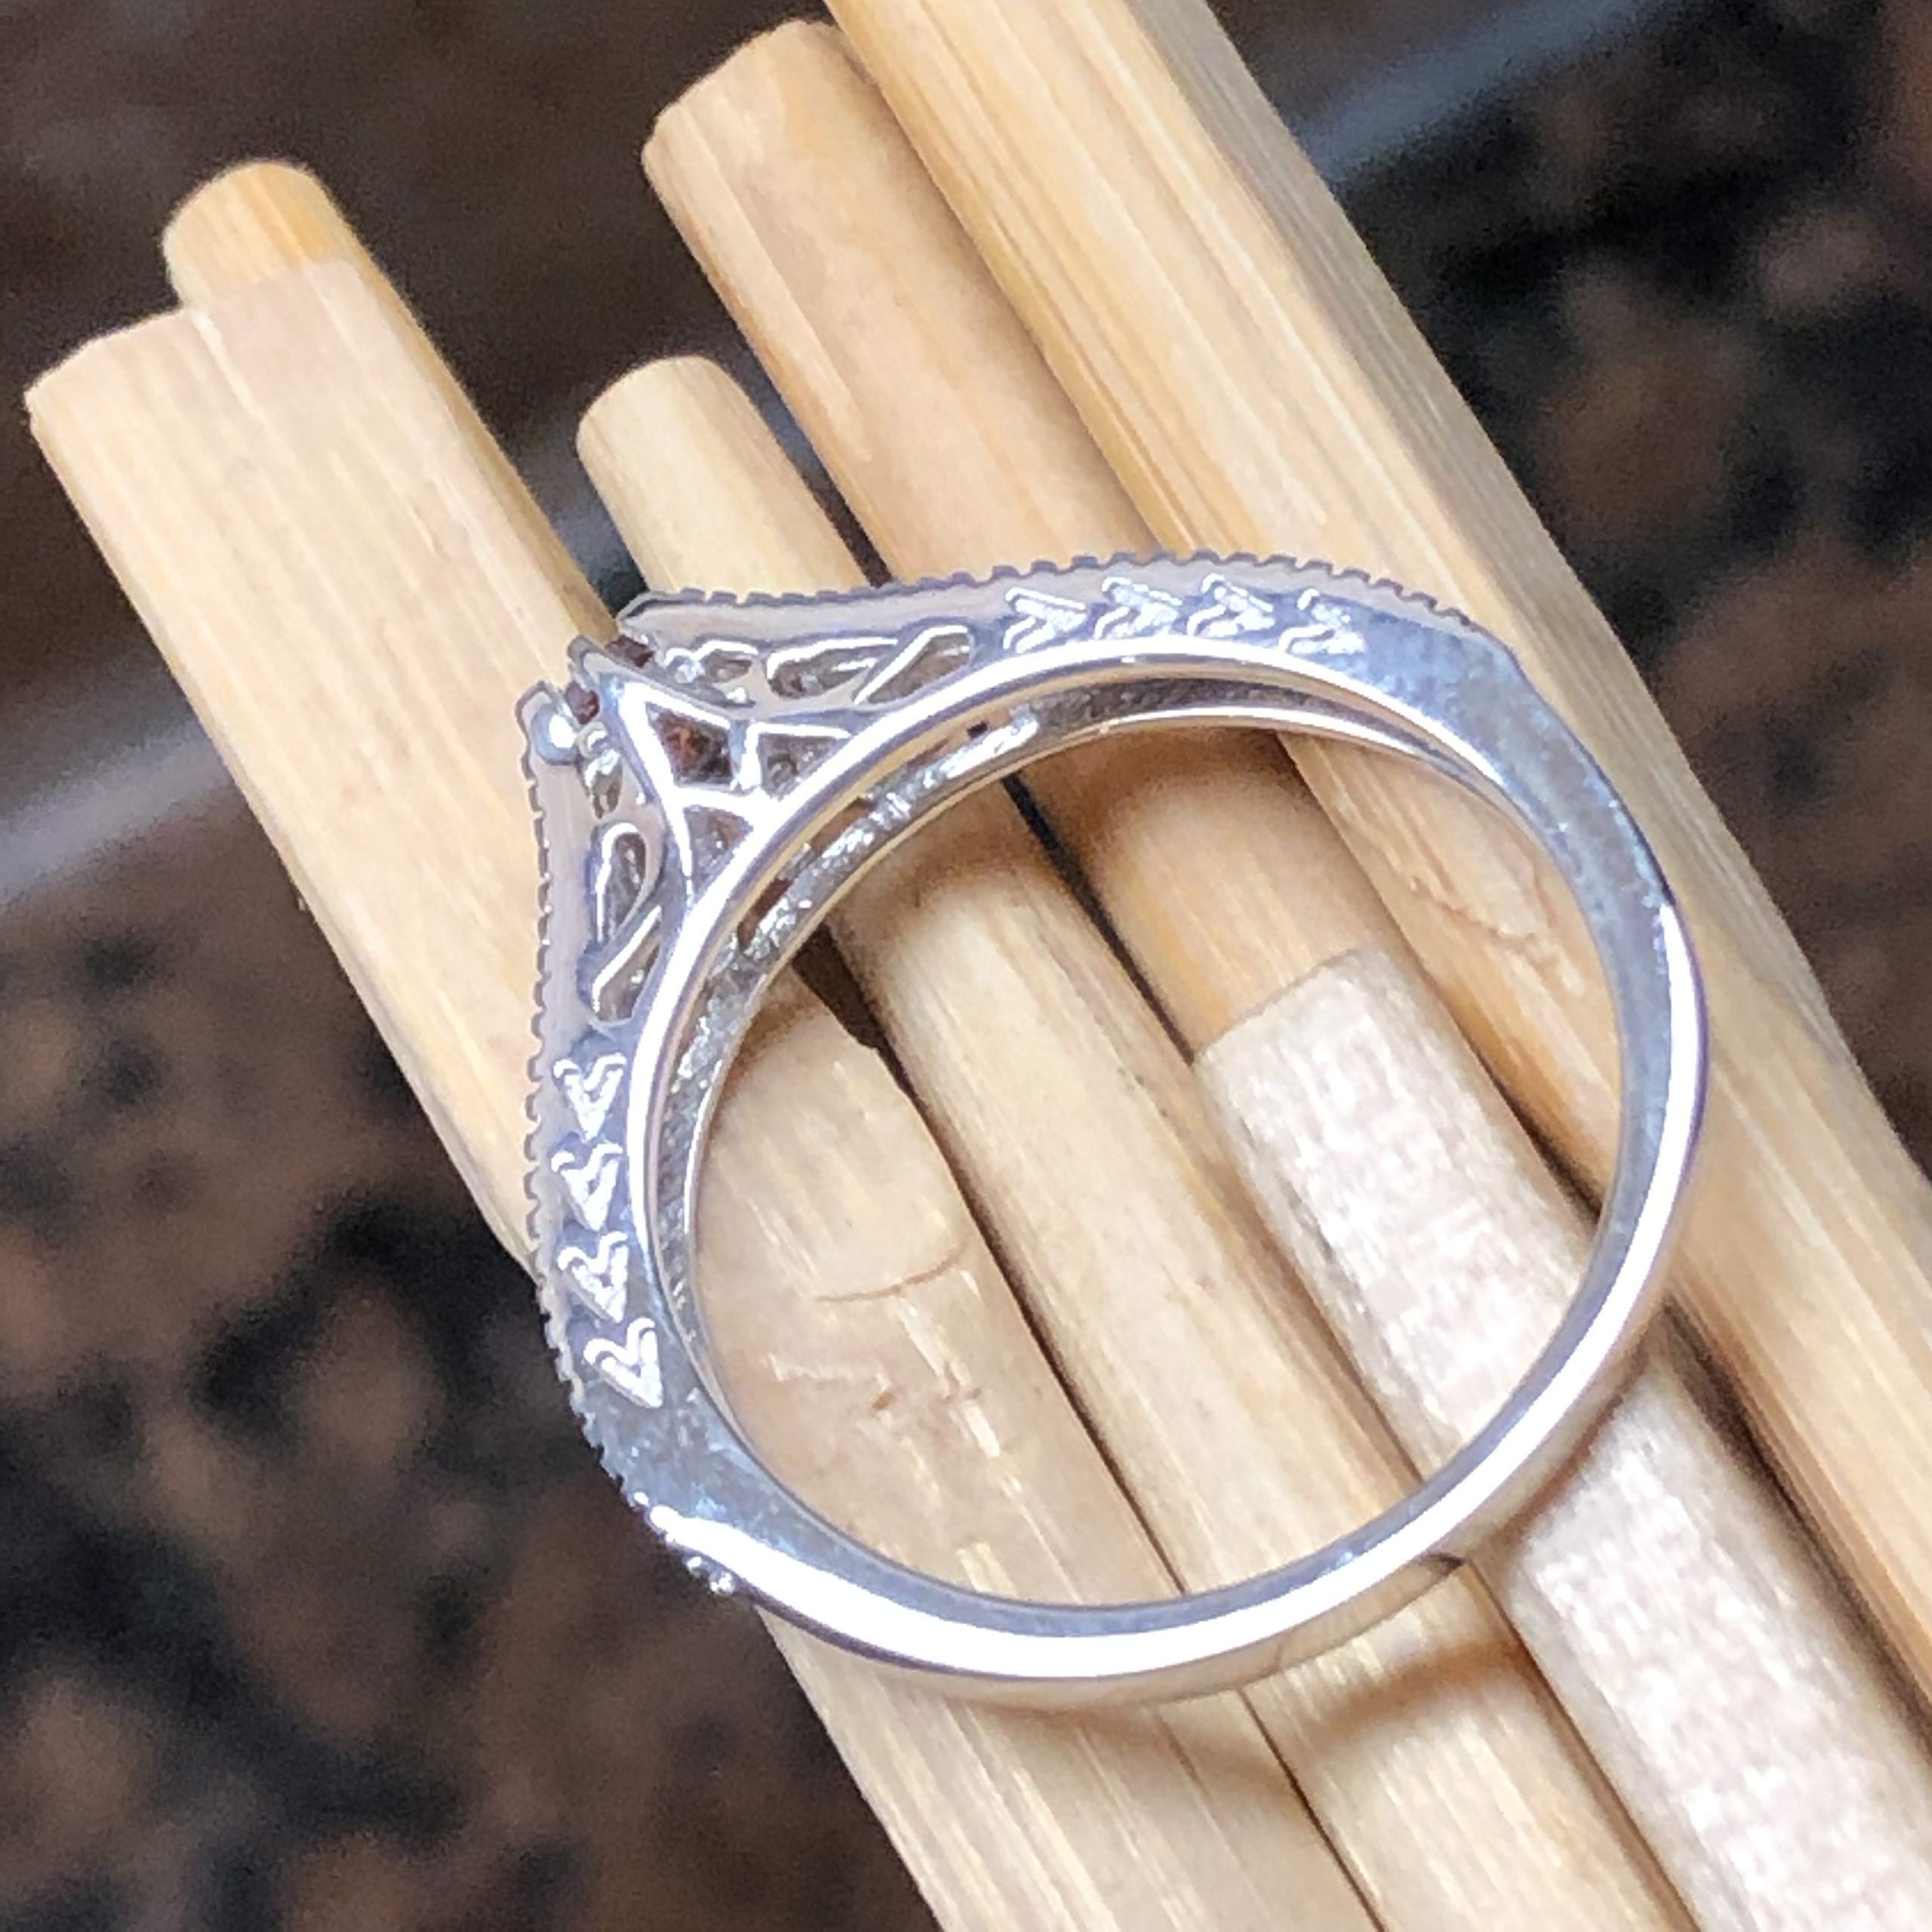 Natural Pyrope Garnet 925 Solid Sterling Silver Engagement Ring Size 6, 7, 8, 9 - Natural Rocks by Kala